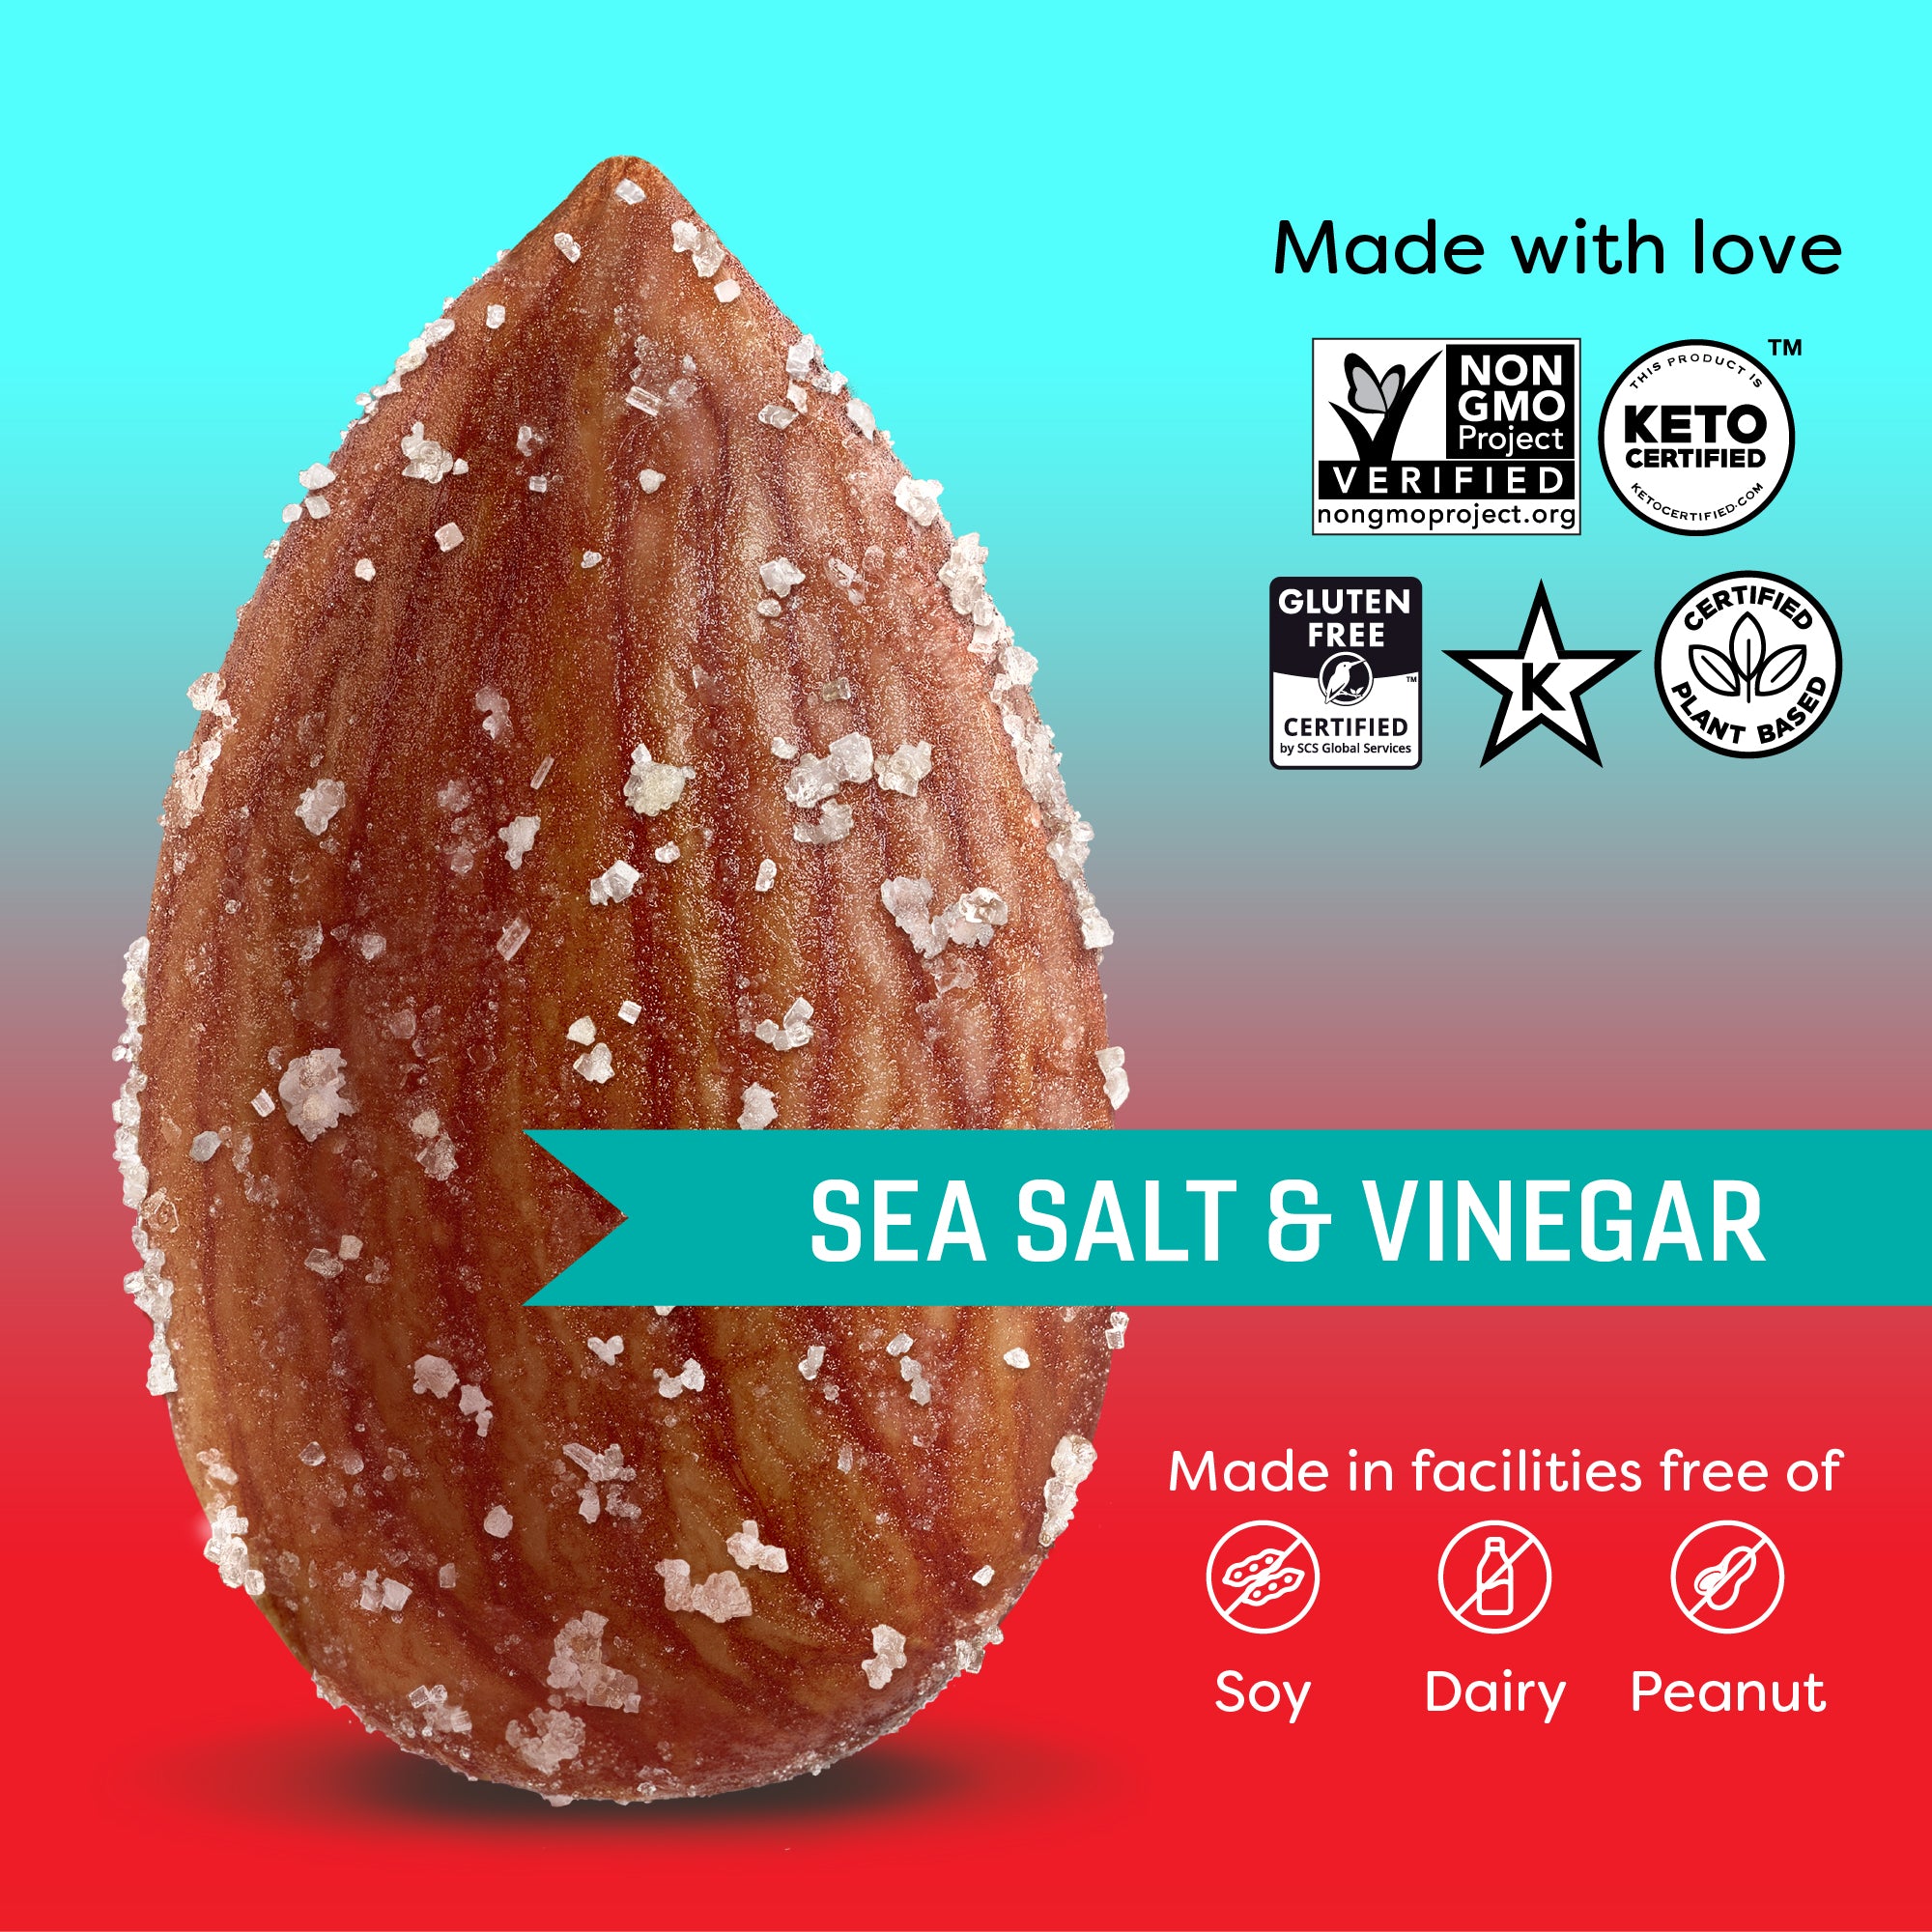 Sea Salt & Vinegar Roasted Almonds (16oz) Octo-Pack